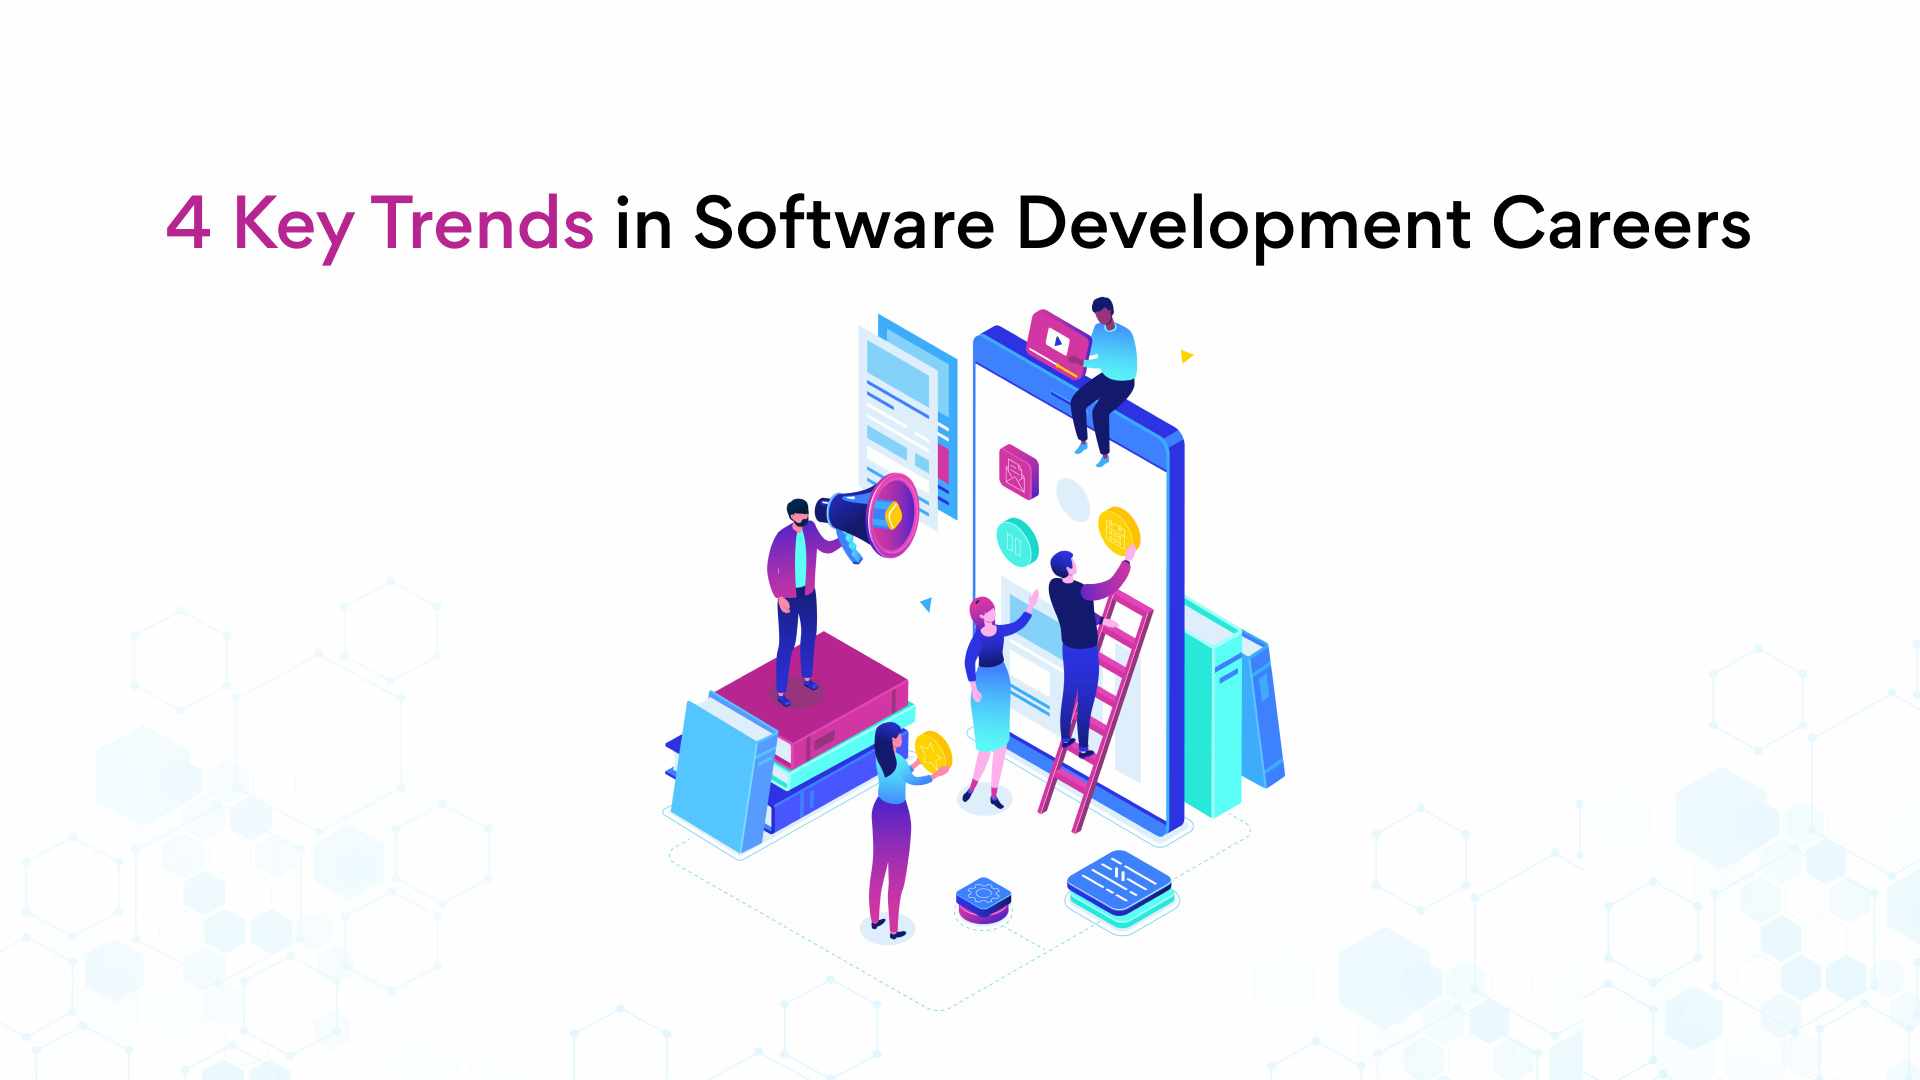 Key trends in software development careers